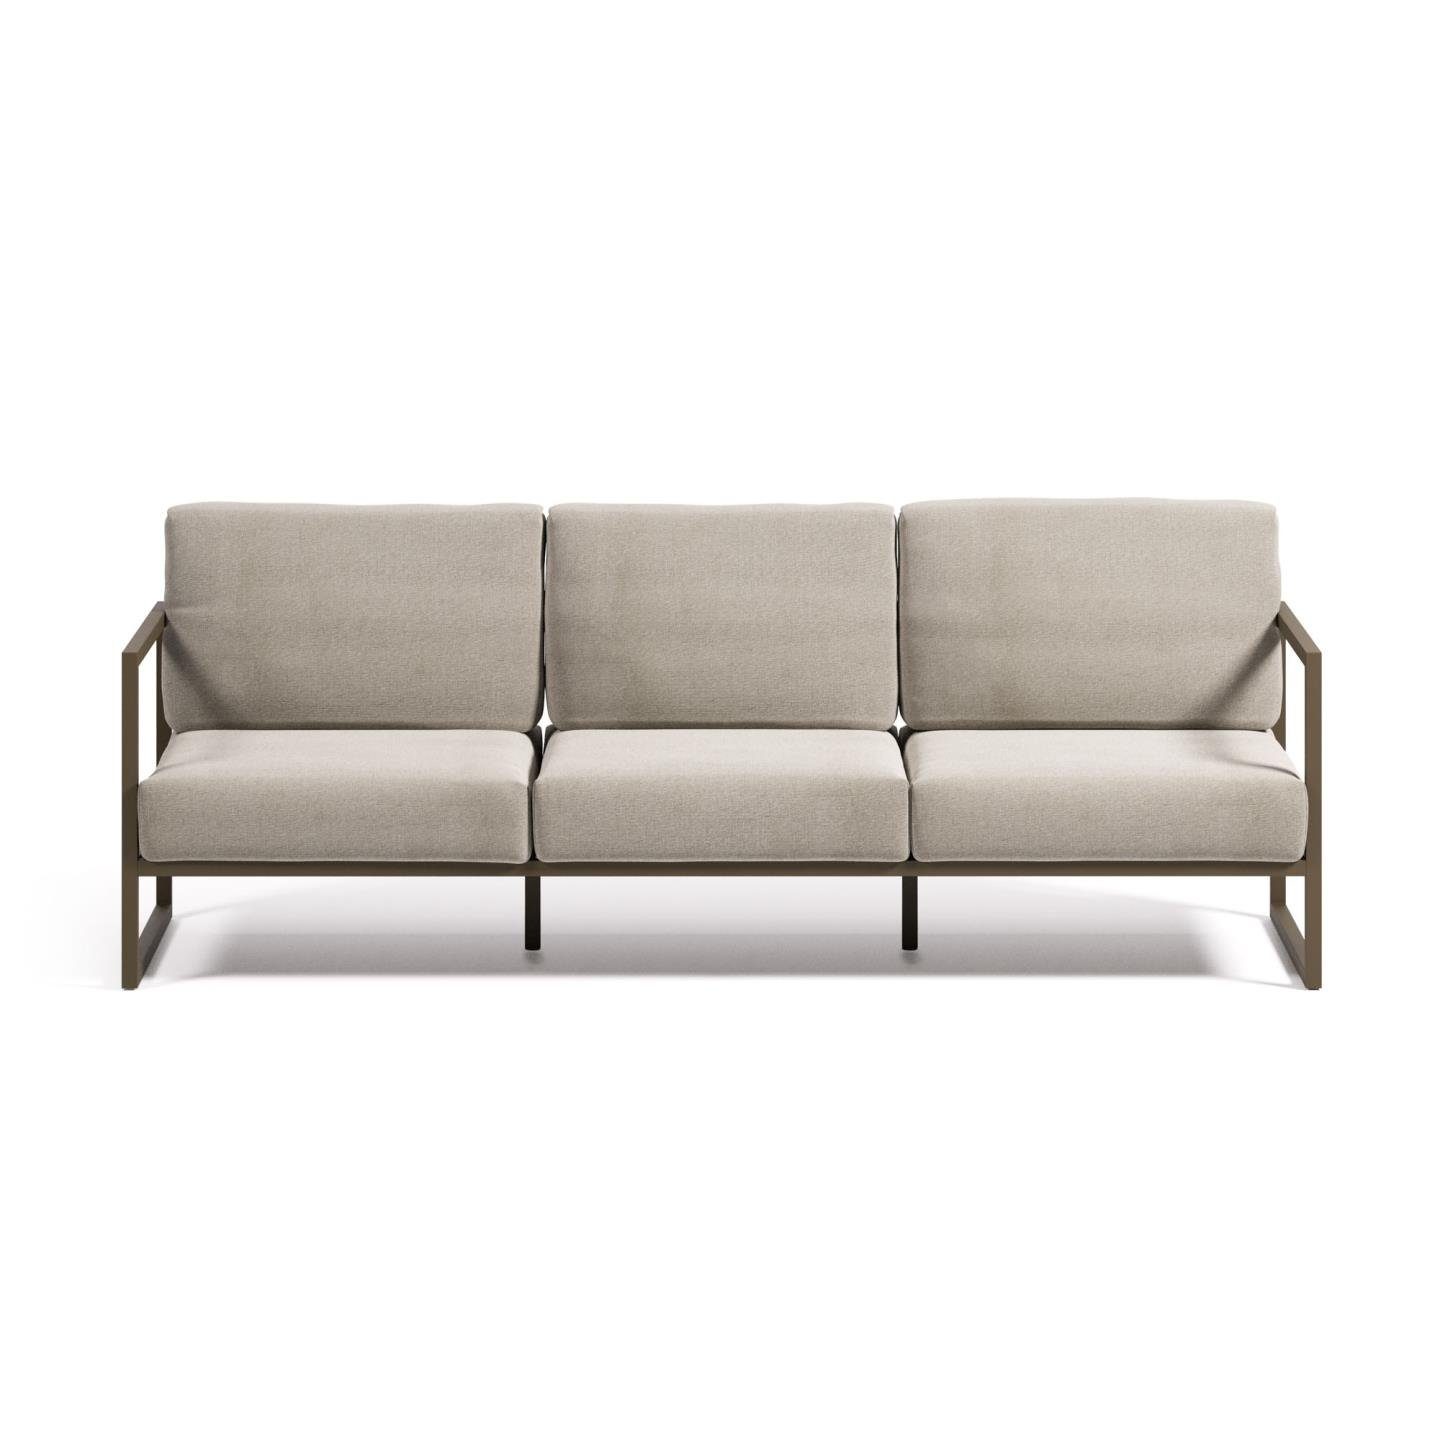 Natur24 Sofa Outdoor 3-Sitzer-Sofa hellgrau 225 x 85 x 85 cm Sitzgarnitur Couch